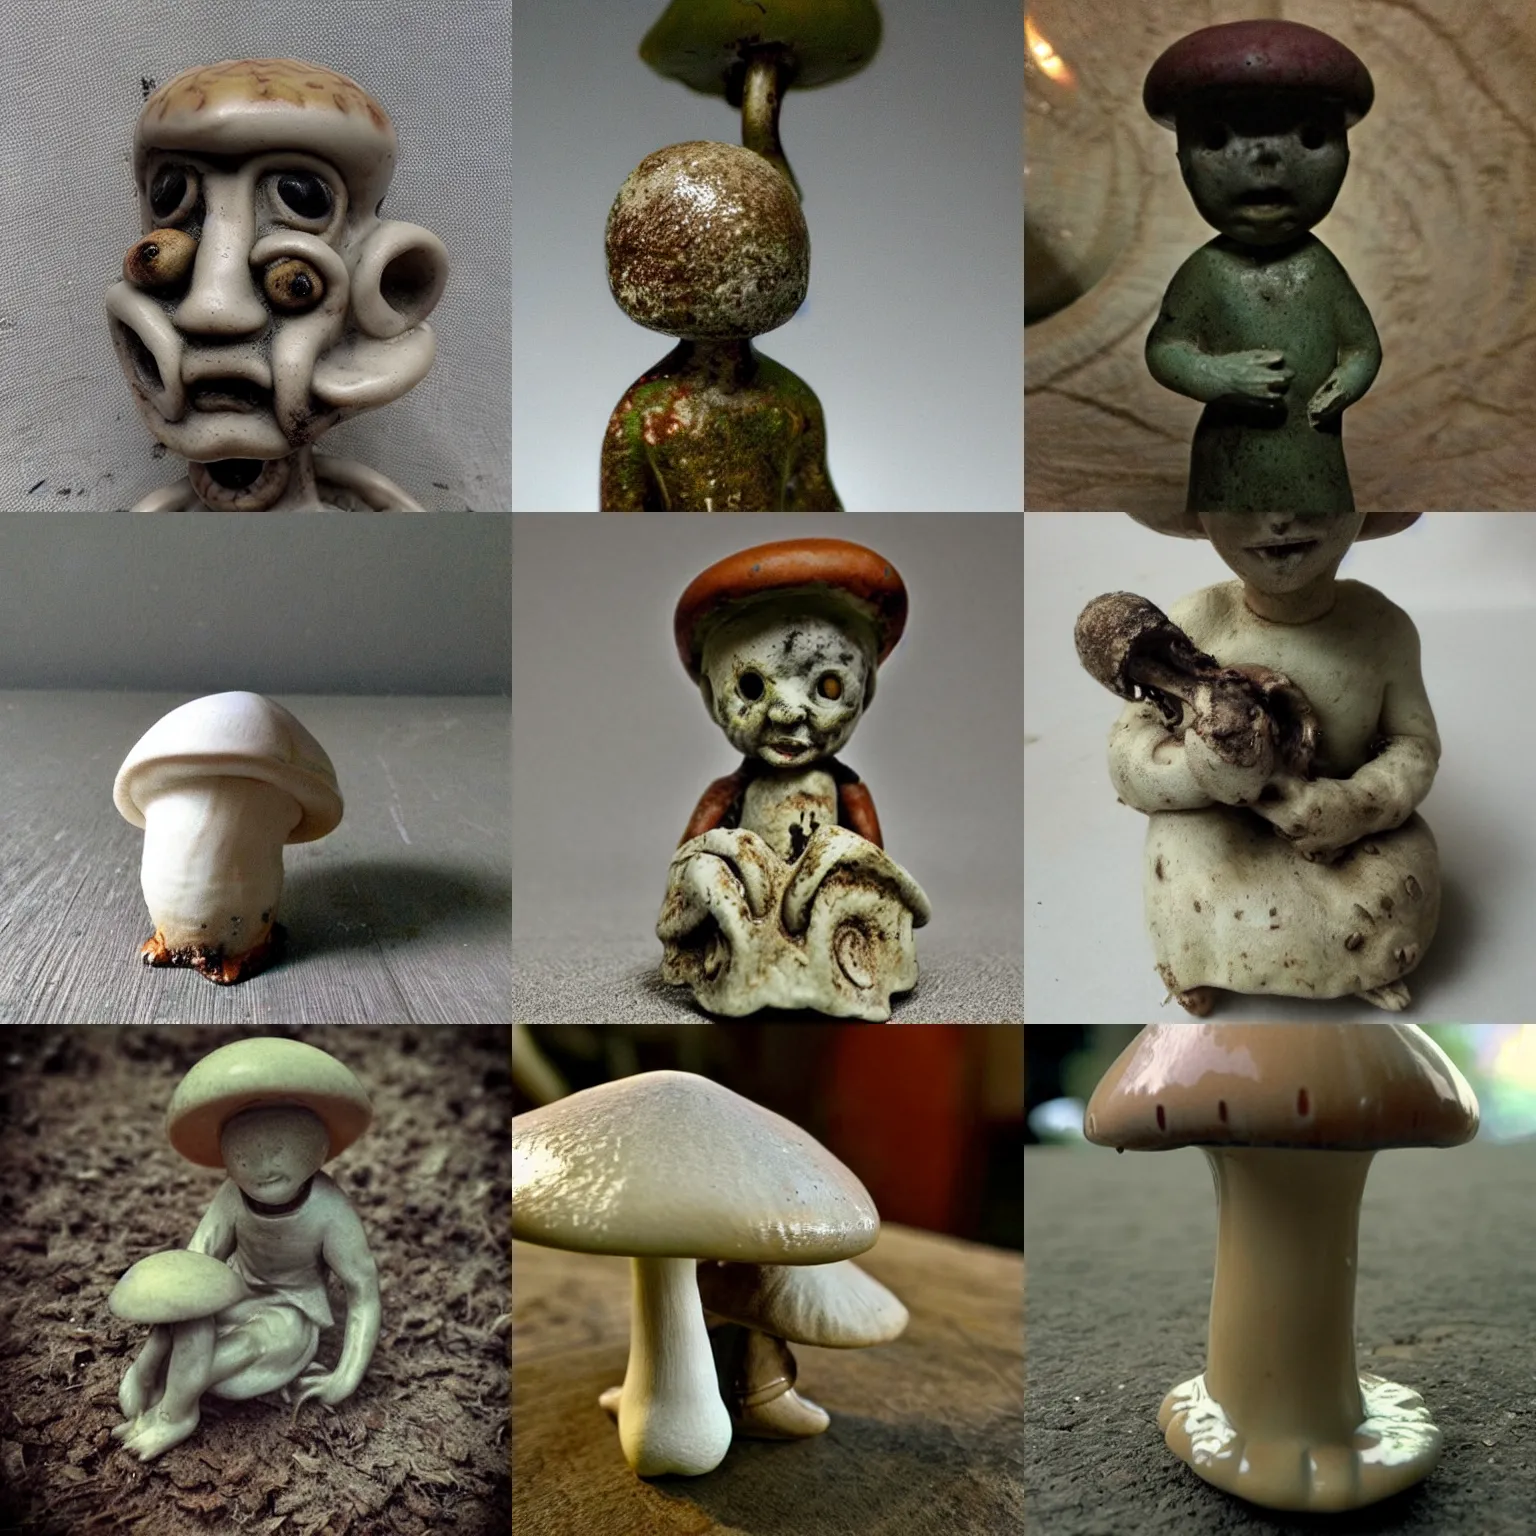 Prompt: antique! mushroom!!! ceramic figurine, cursed image, eerie horror, unsettling disturbing creepy macro photo, bad quality